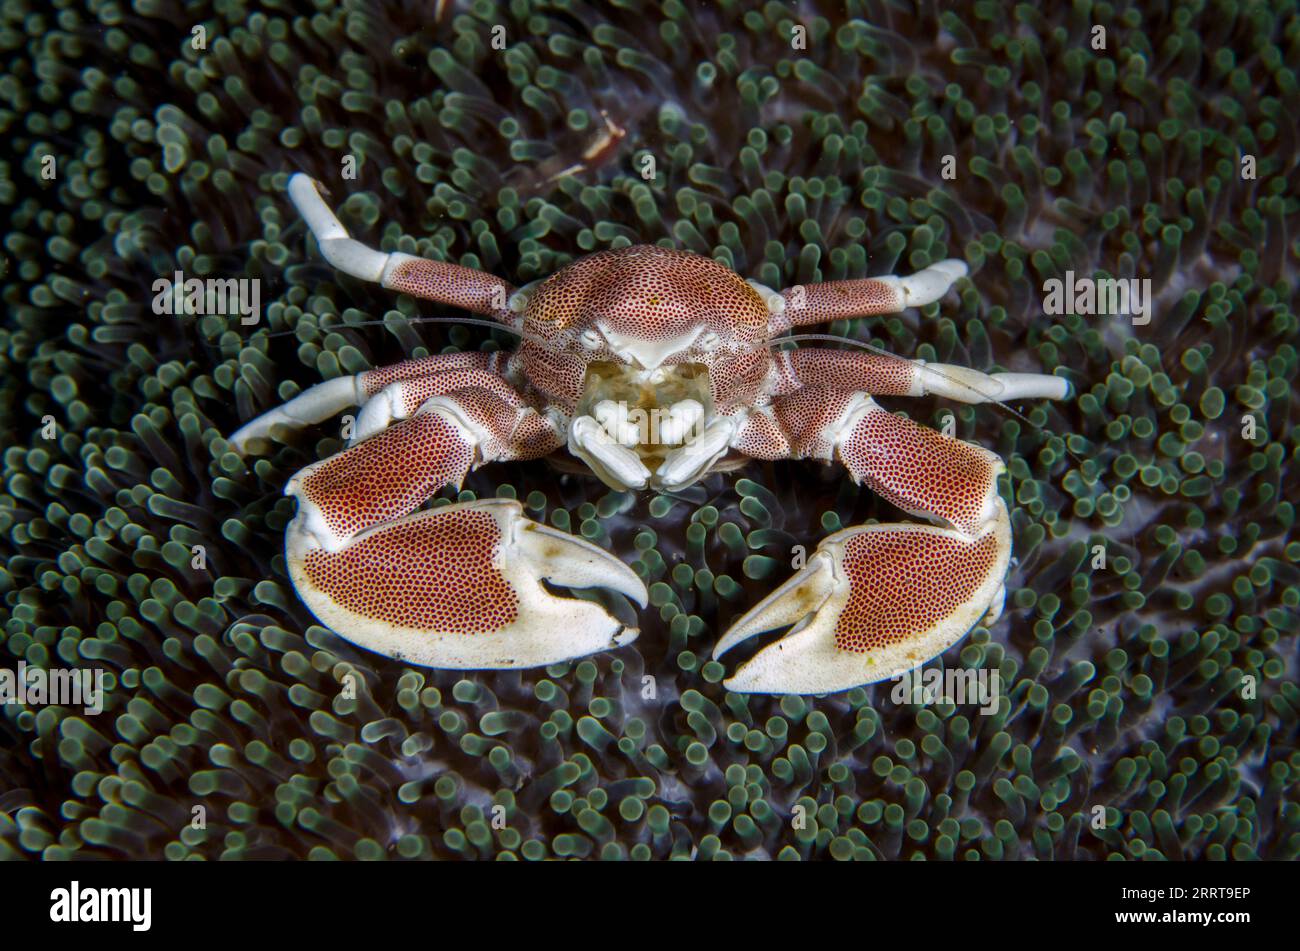 Porcelain Crab, Neopetrolisthes maculatus, withCommensal Shrimps, Periclimenes sp, on Giant Carpet Anemone, Stichodactyla gigantea, Melasti dive site, Stock Photo